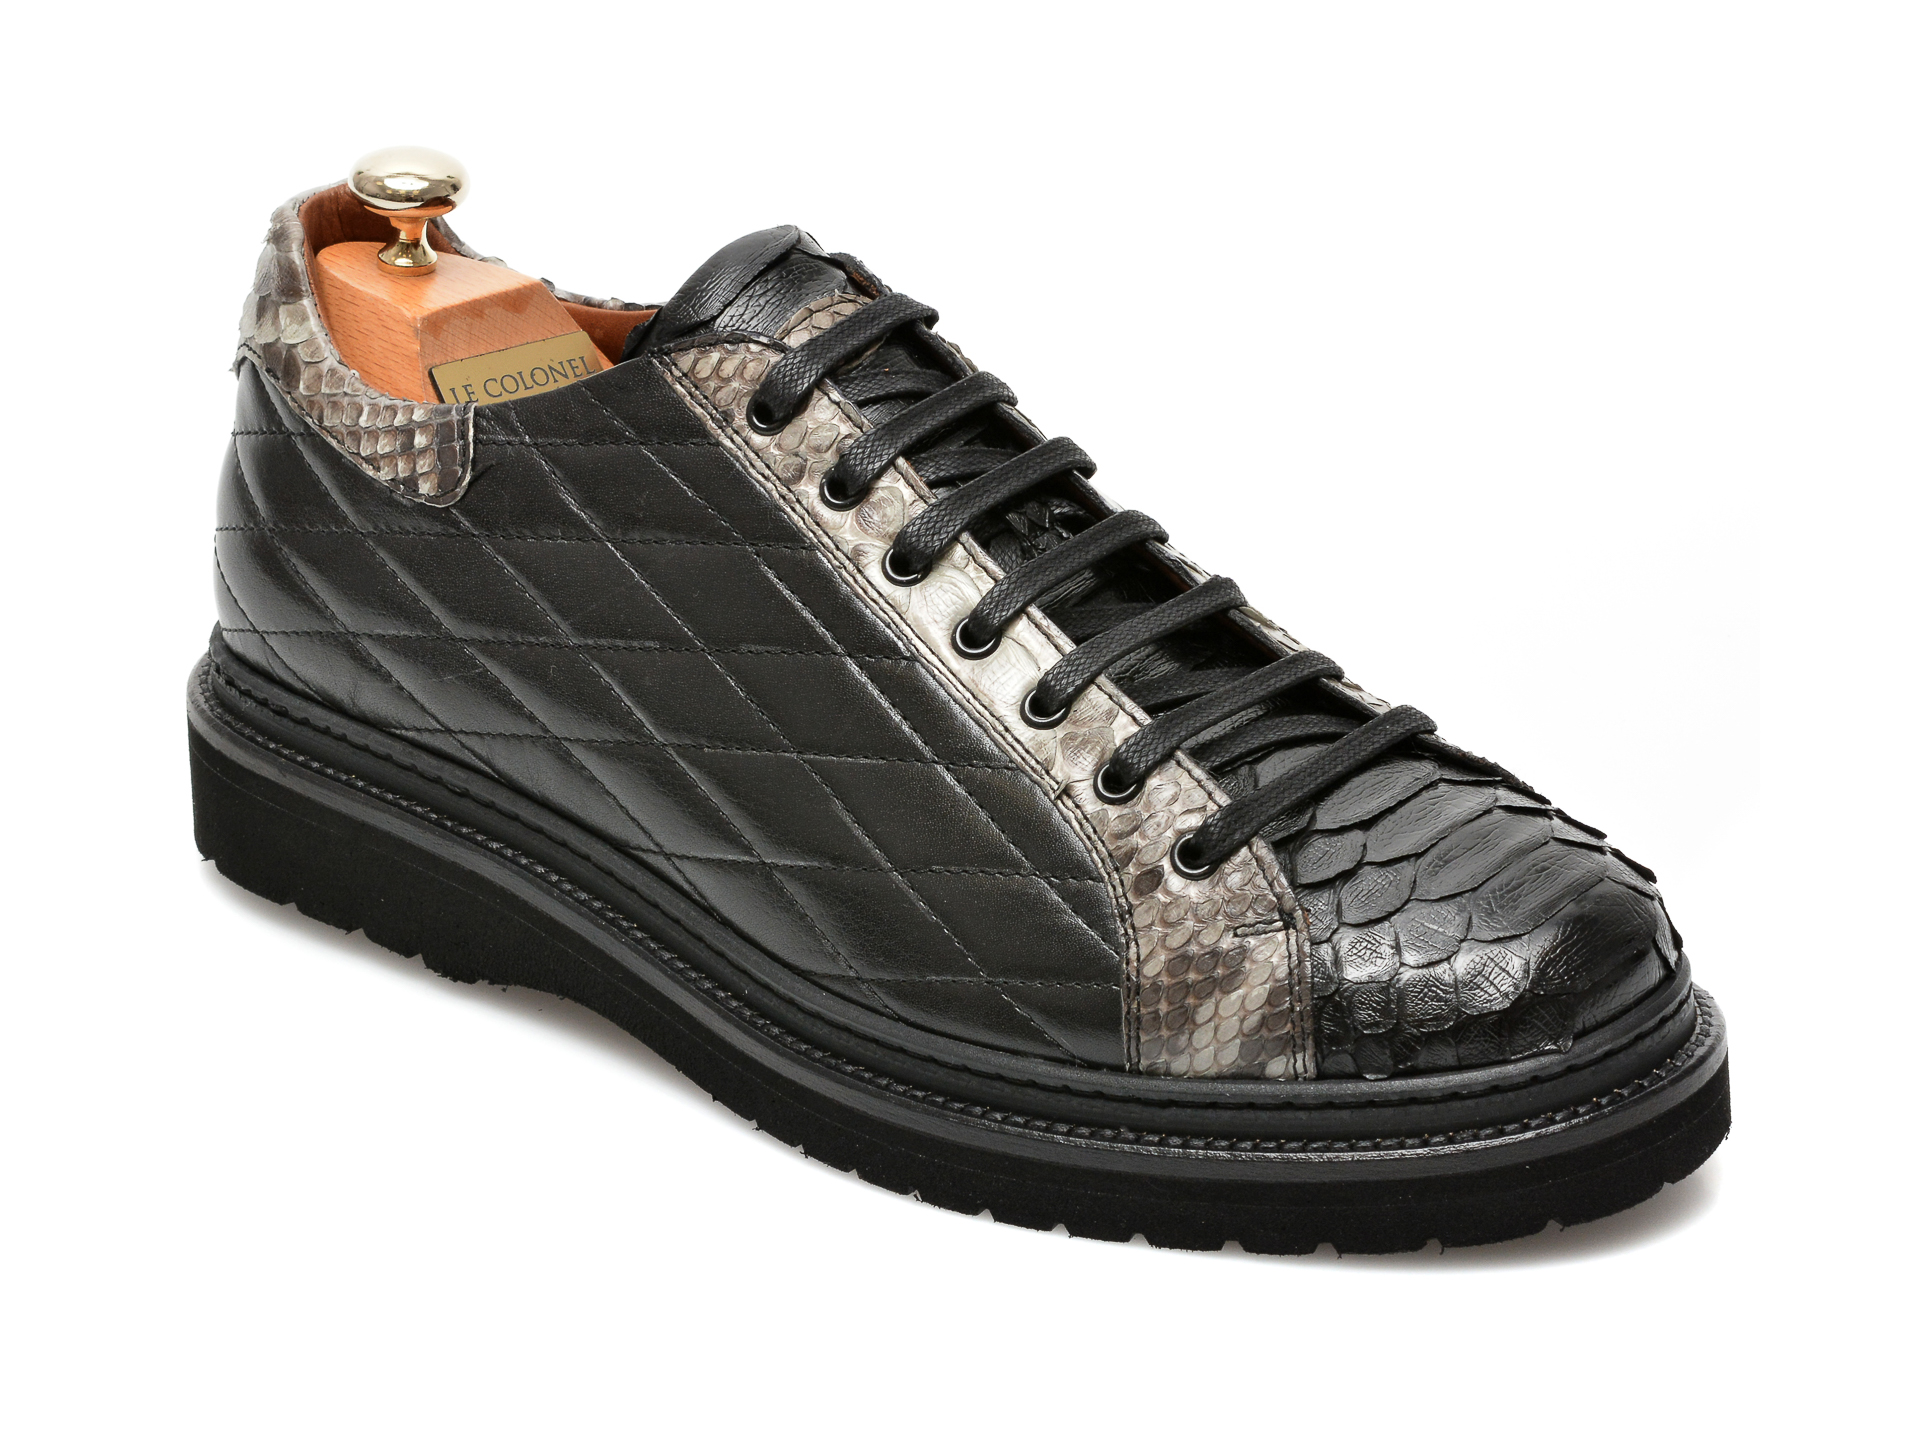 Pantofi LE COLONEL negri, 64802, din piele naturala Le Colonel imagine 2022 13clothing.ro